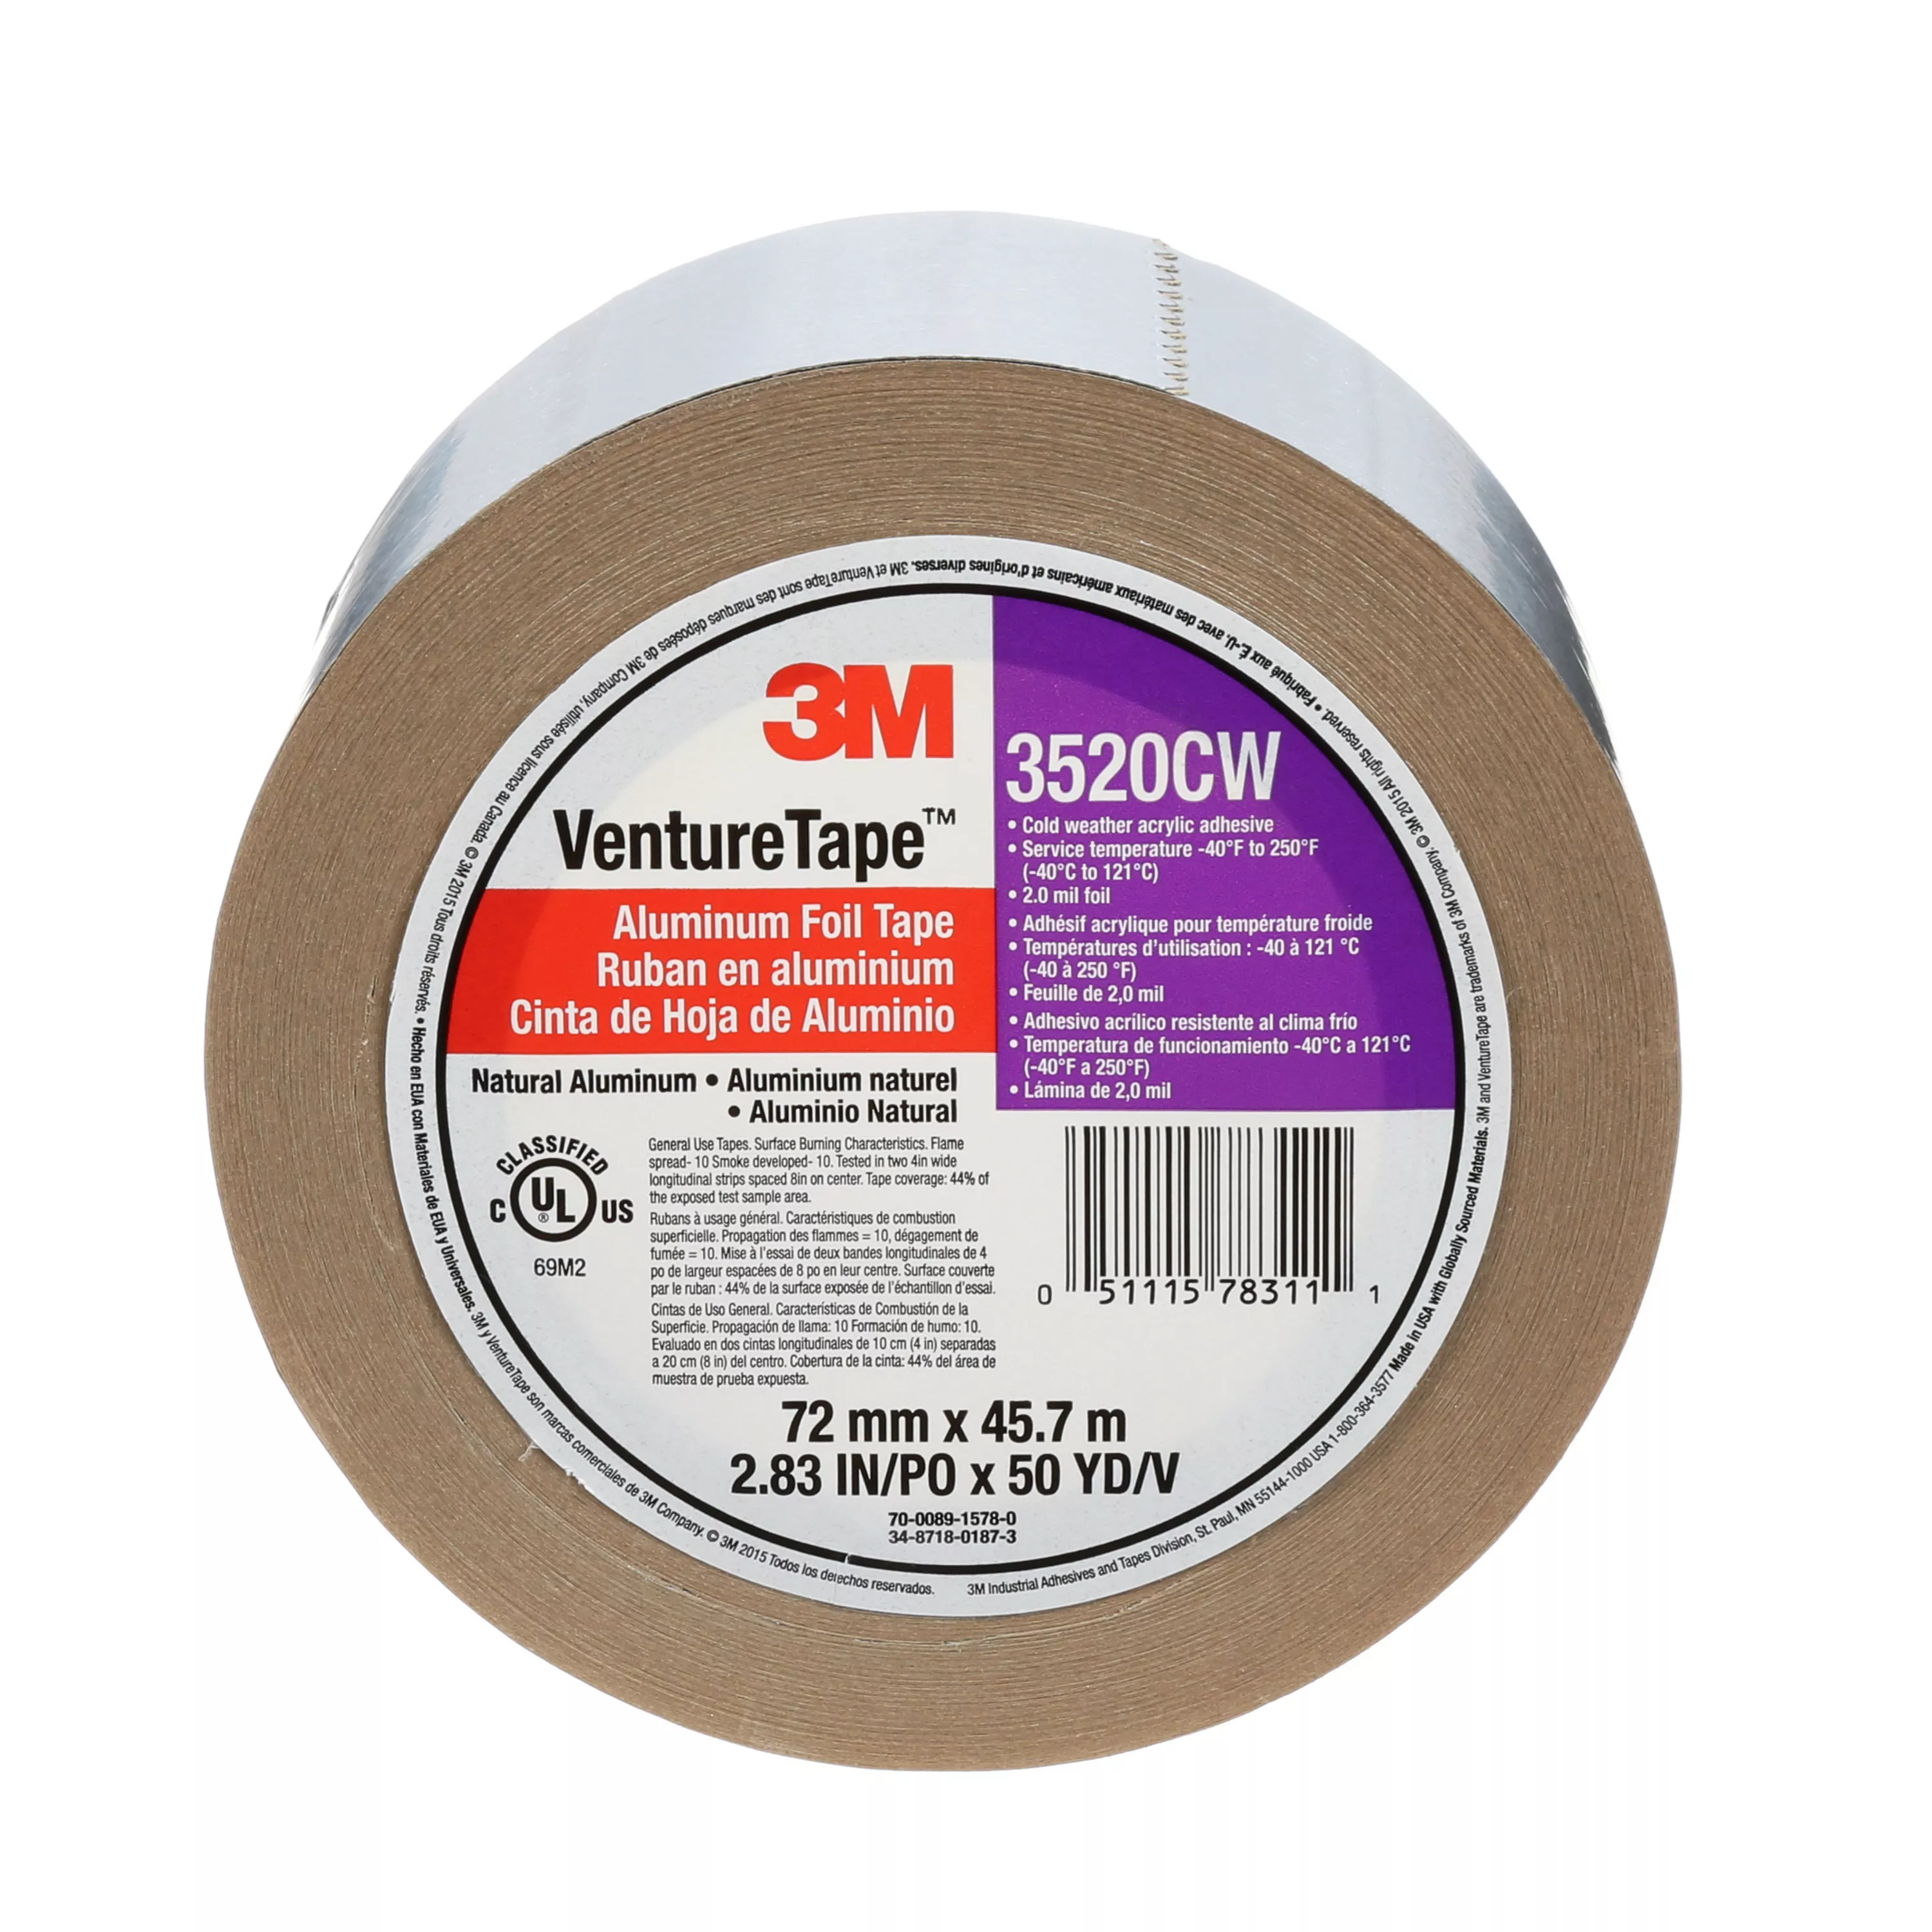 SKU 7100043750 | 3M™ Venture Tape™ Aluminum Foil Tape 3520CW